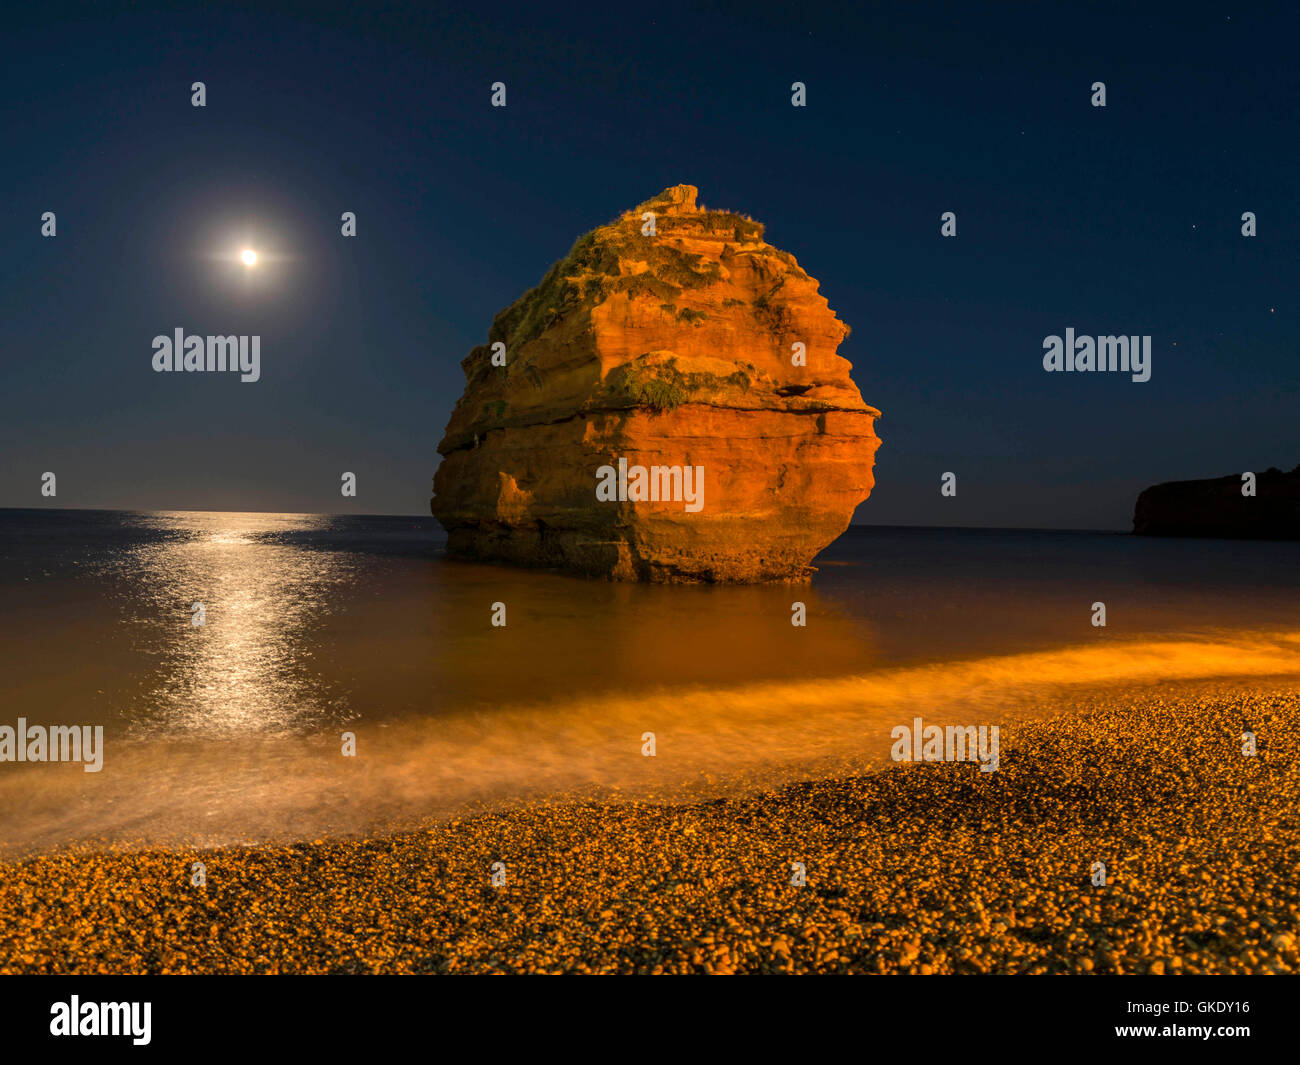 Jurassic coast rock formation by moonlight at Ladram Bay Cove, Devon Stock Photo